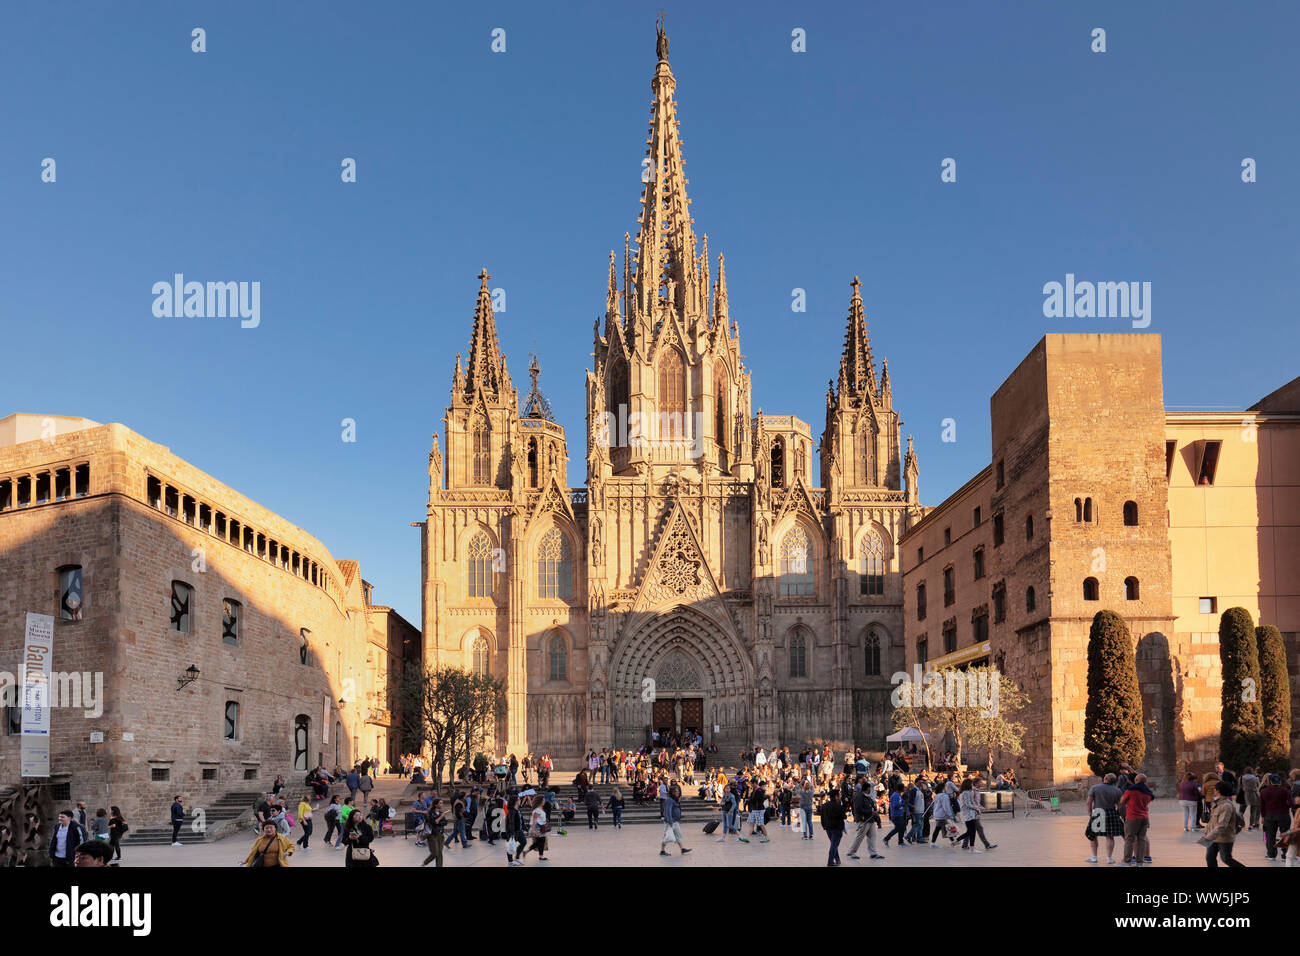 Gotische Kathedrale, La Catedral de la Santa Creu i Santa Eulalia, Barri Gotic, Barcelona, Katalonien, Spanien Stockfoto